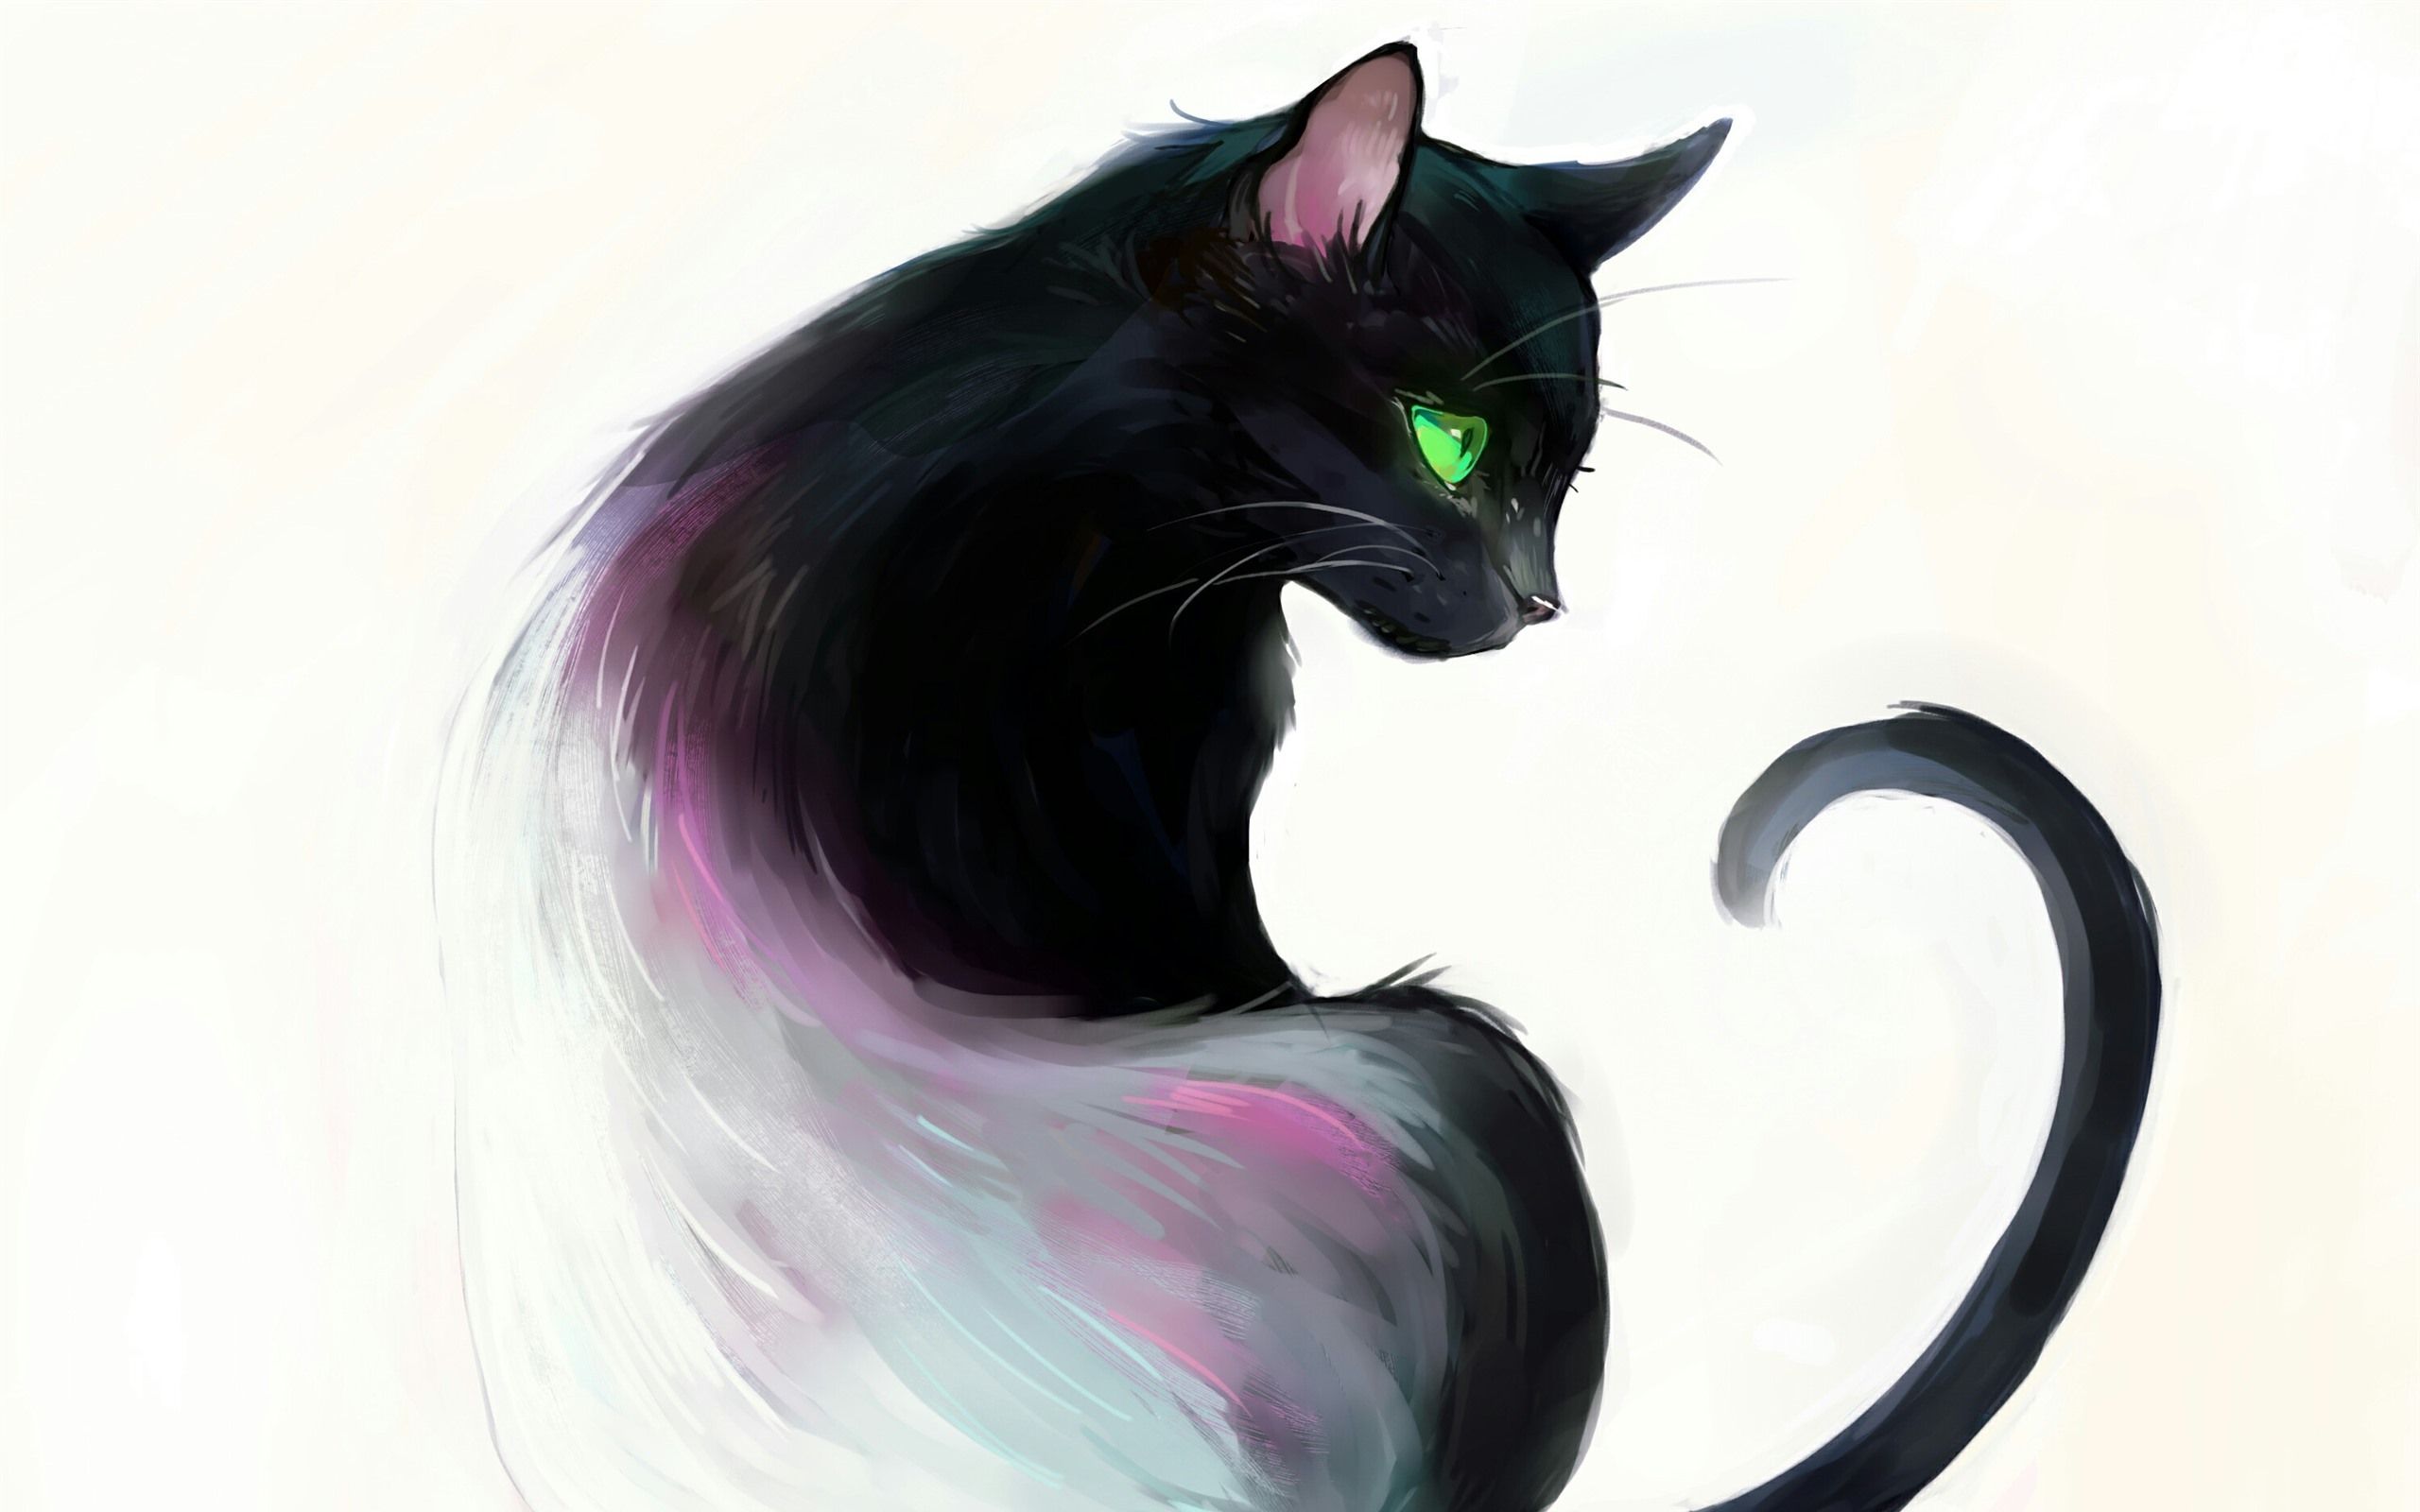  Katze Hintergrundbild 2560x1600. Kunstmalerei, schwarze Katze, Blick zurück, grüne Augen, Buch 2880x1800 HD Hintergrundbilder, HD, Bild